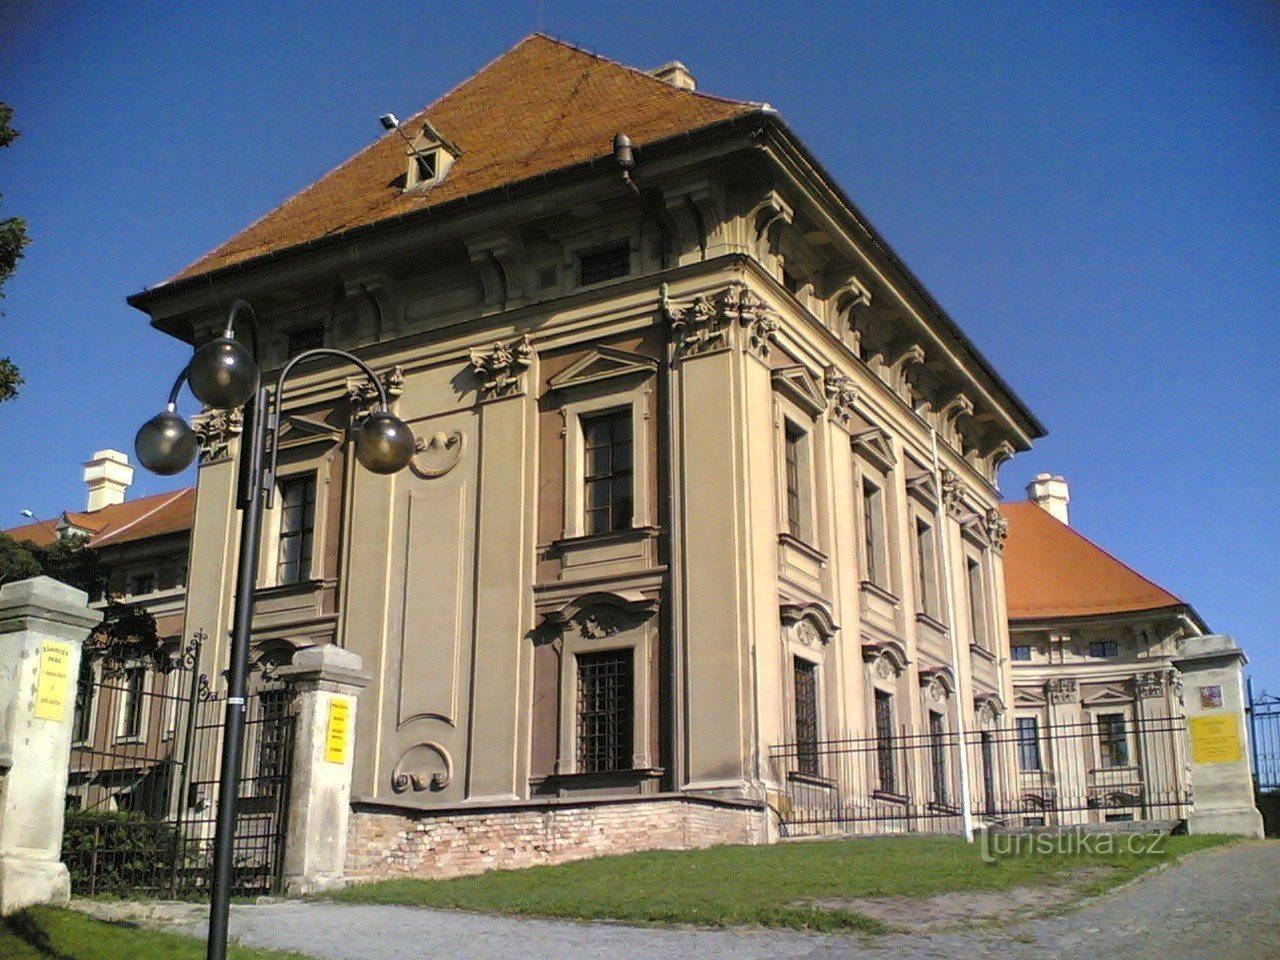 Grad Slavkov pri Brnu - Austerlitz